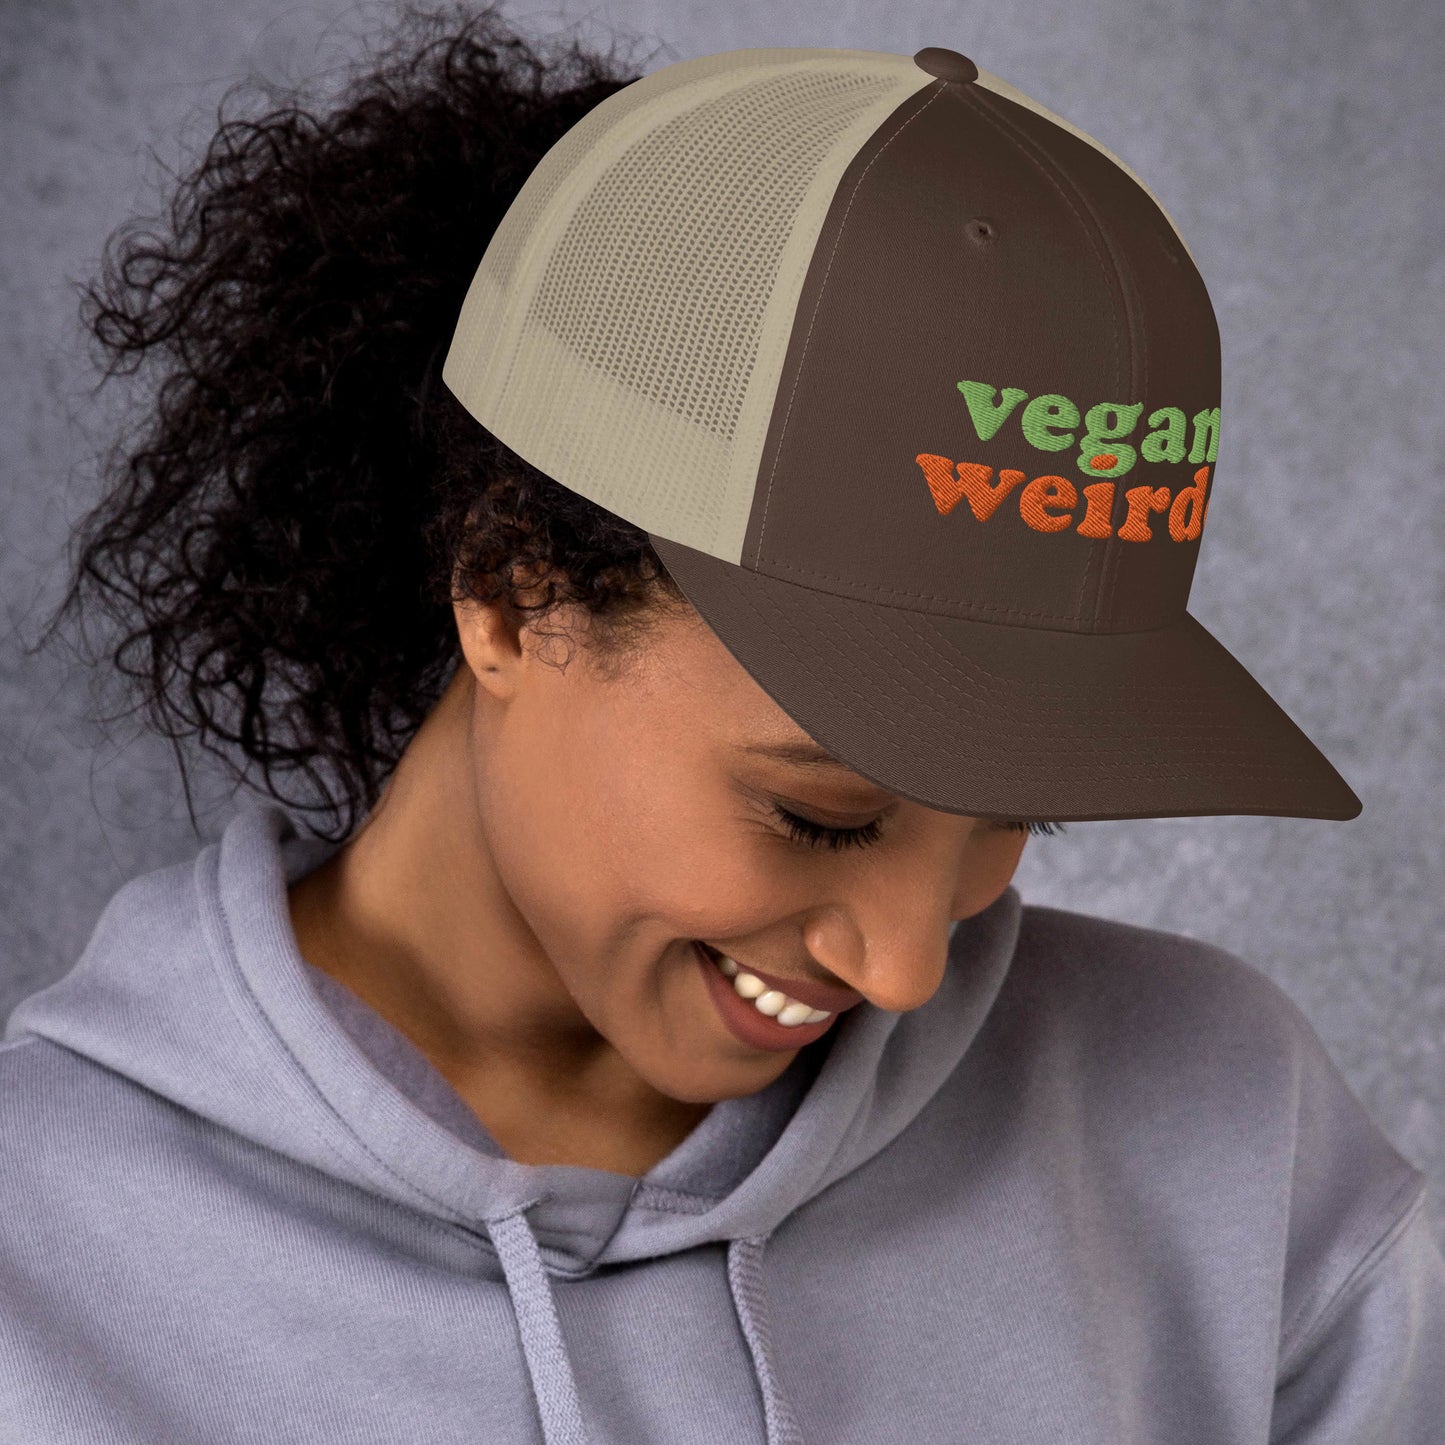 VEGAN WEIRDO / trucker hat